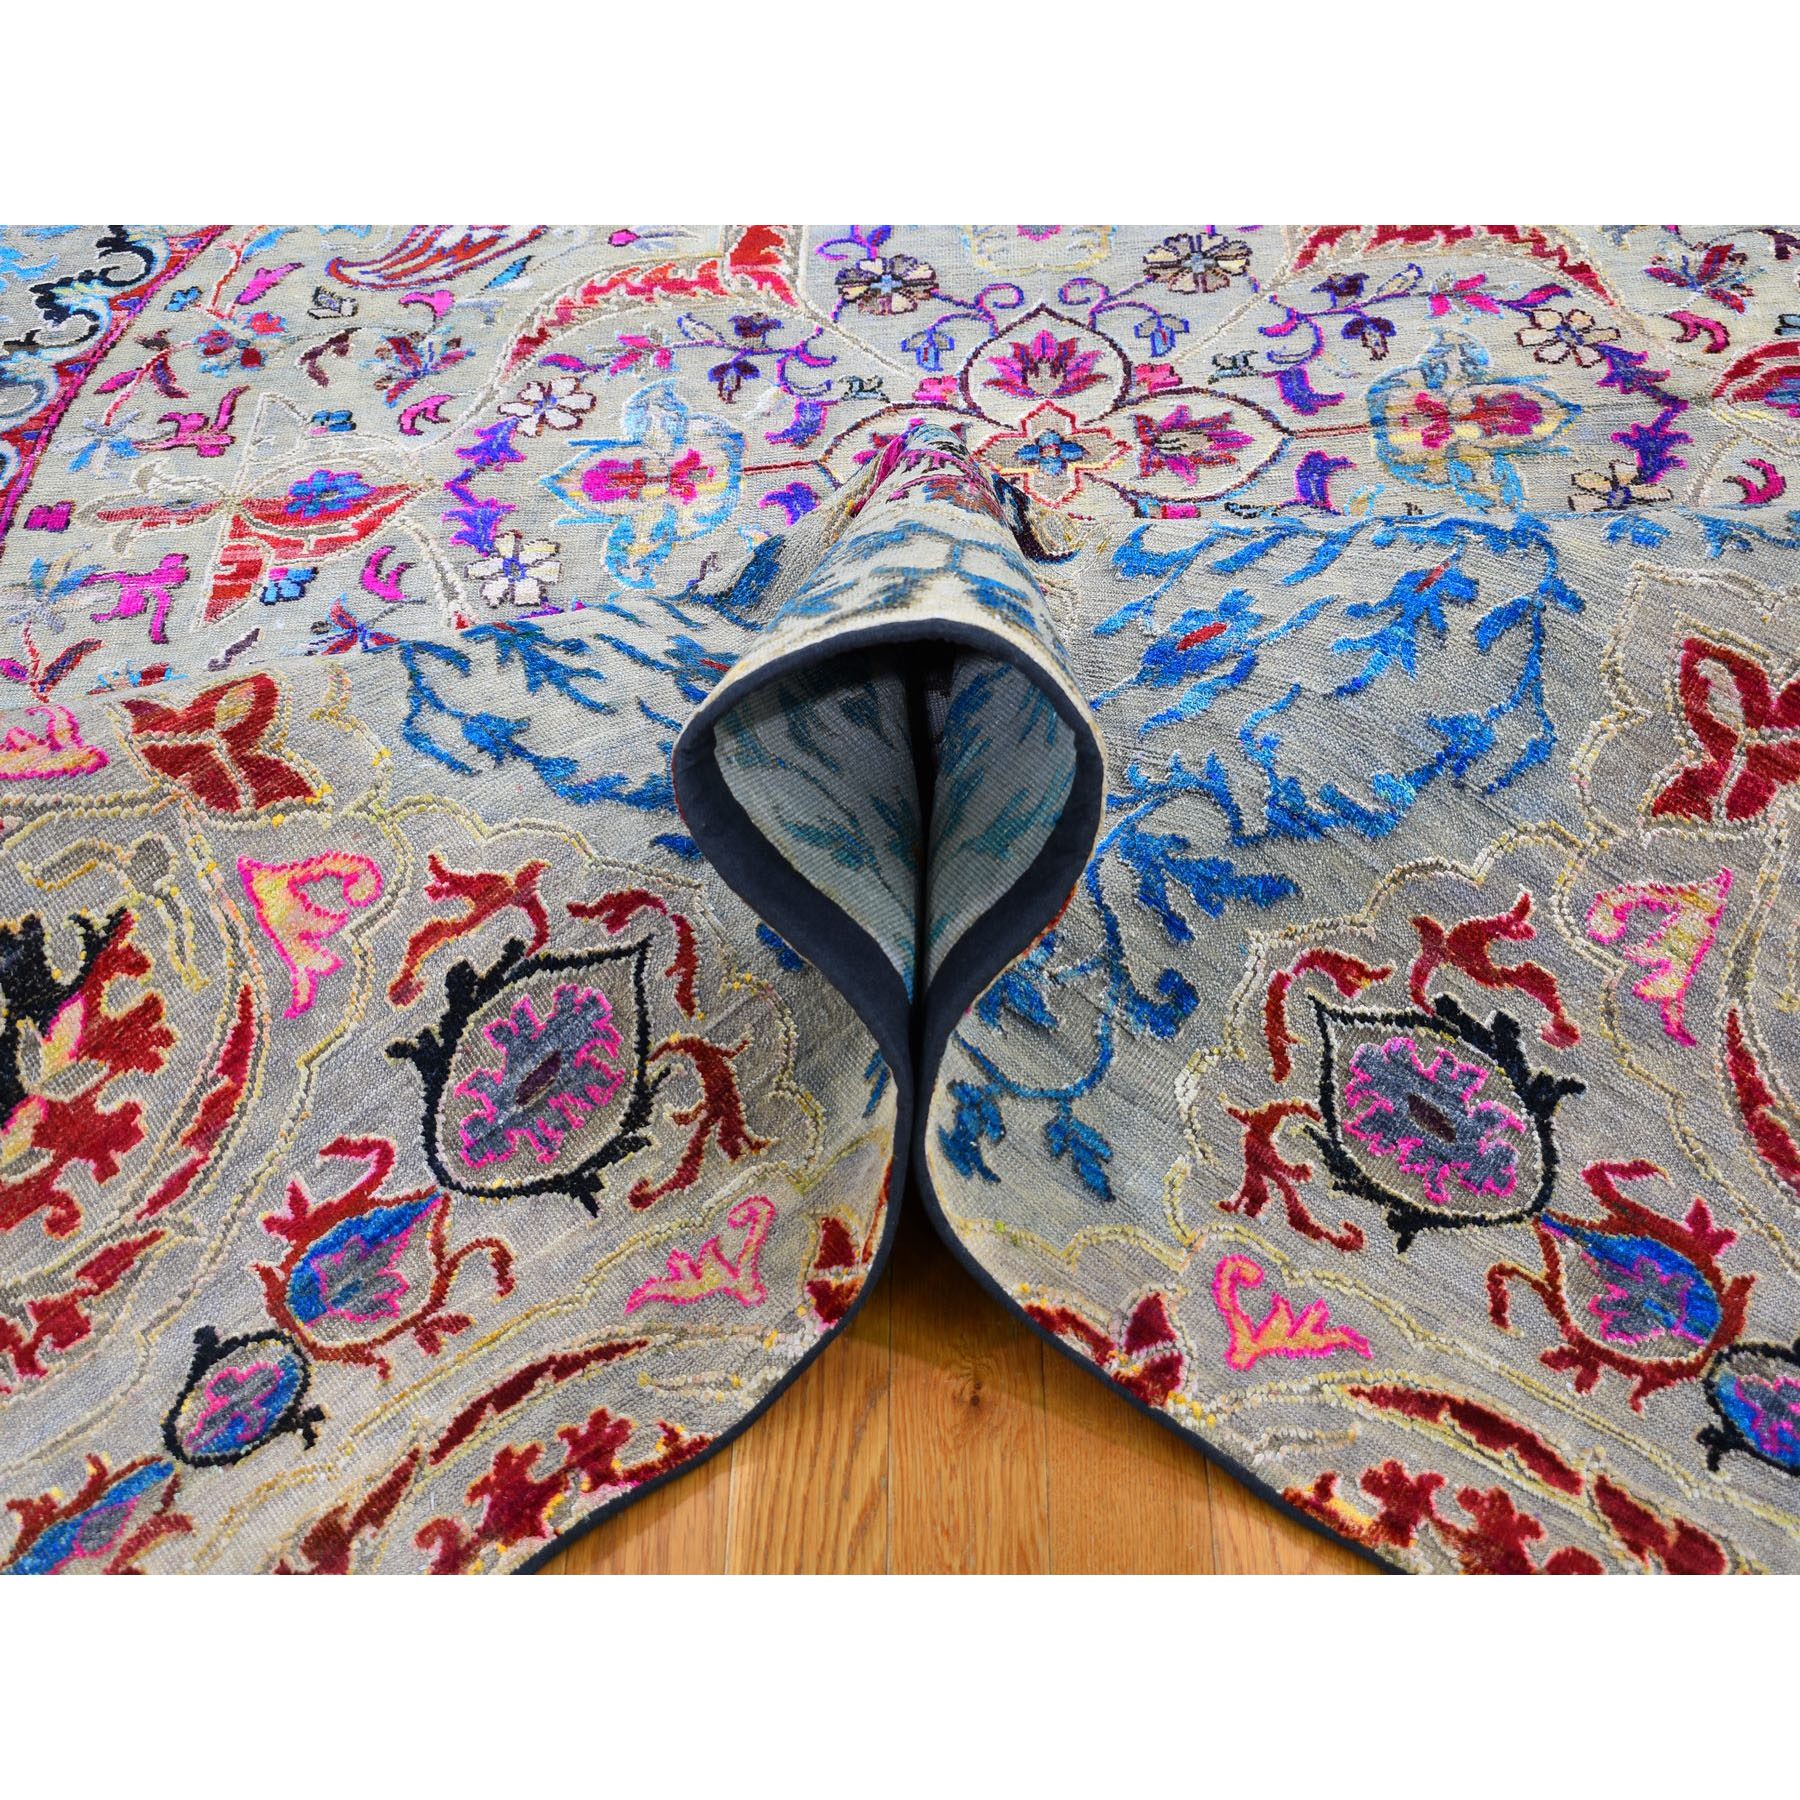 8'x10' Sapphire Blue Sari Silk and Textured Wool Colorful Maharaja Design Hand Woven Oriental Rug 